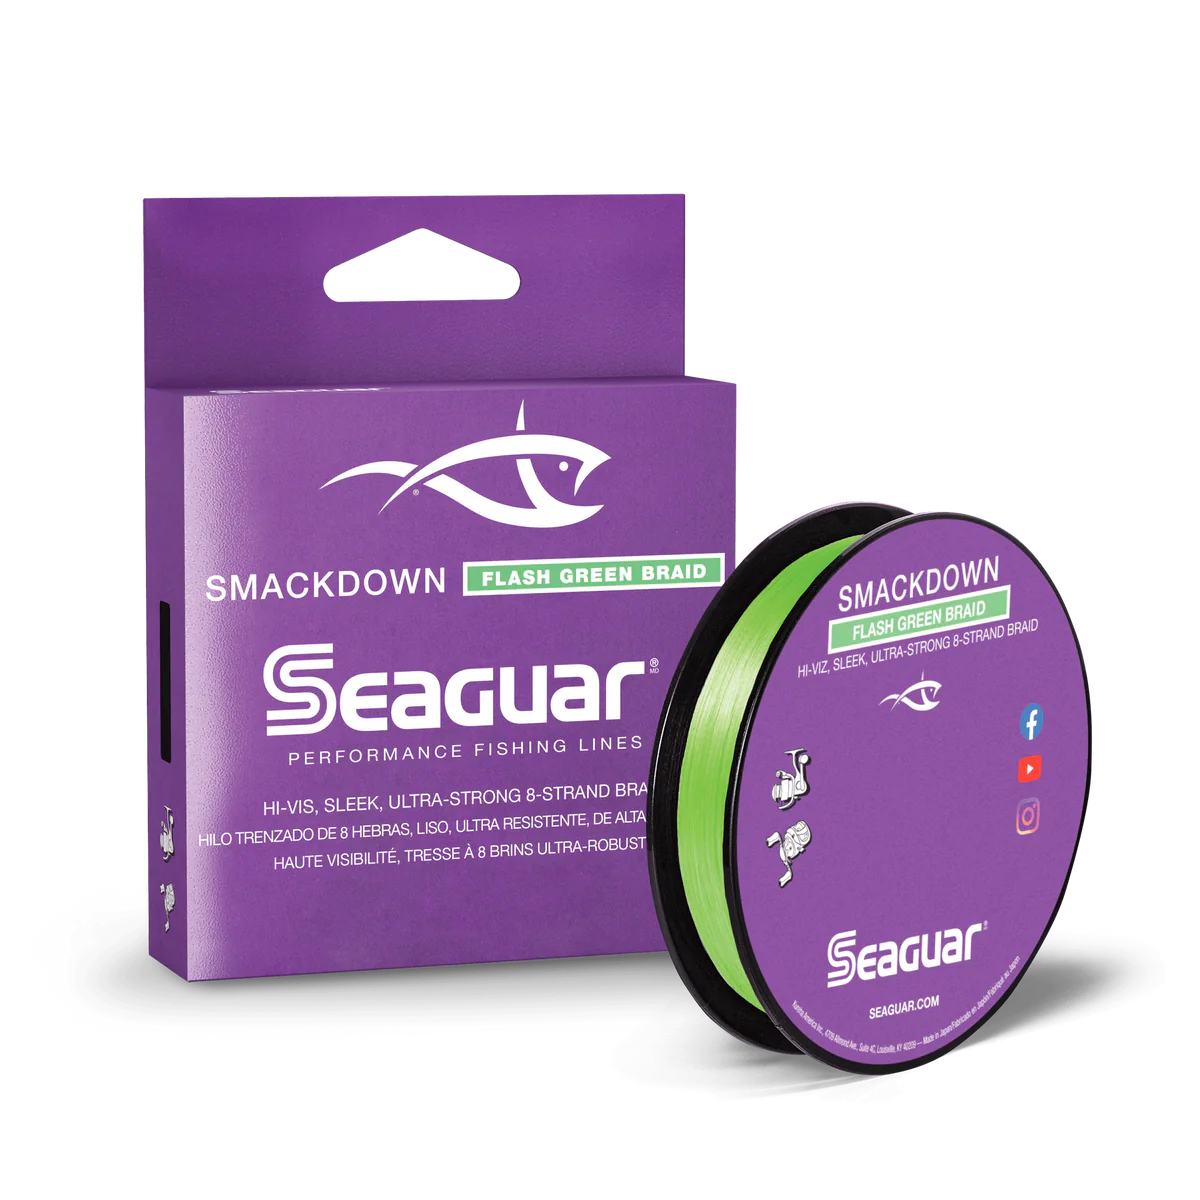 Seaguar Smackdown Braid 150yd